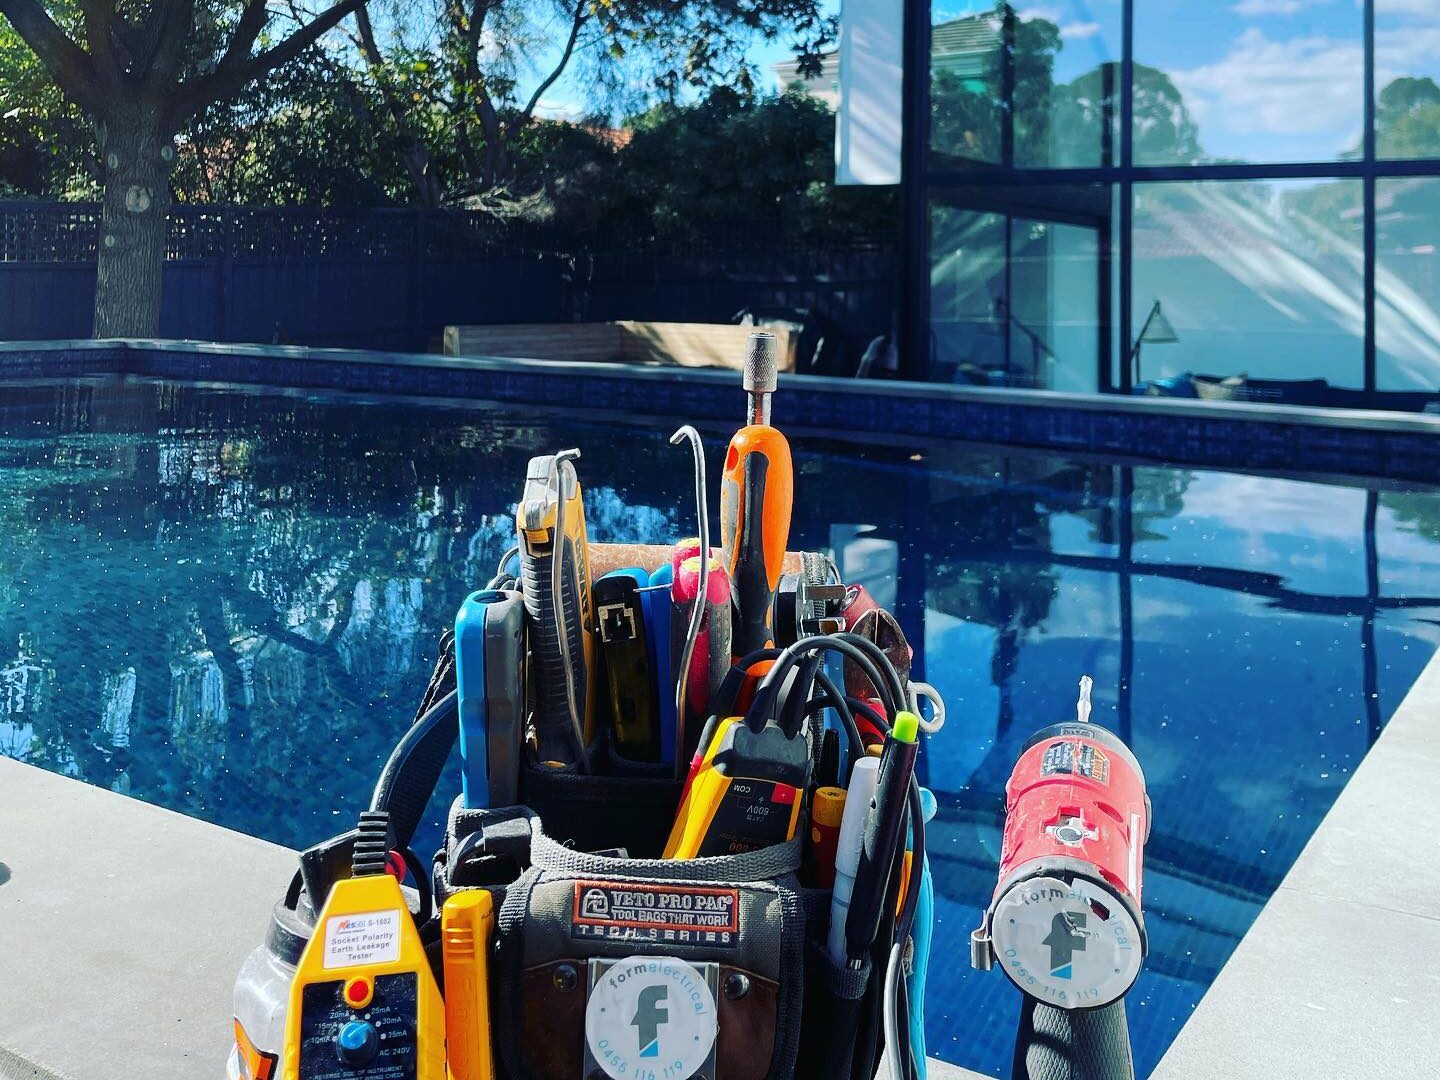 Pool electrician tool kit